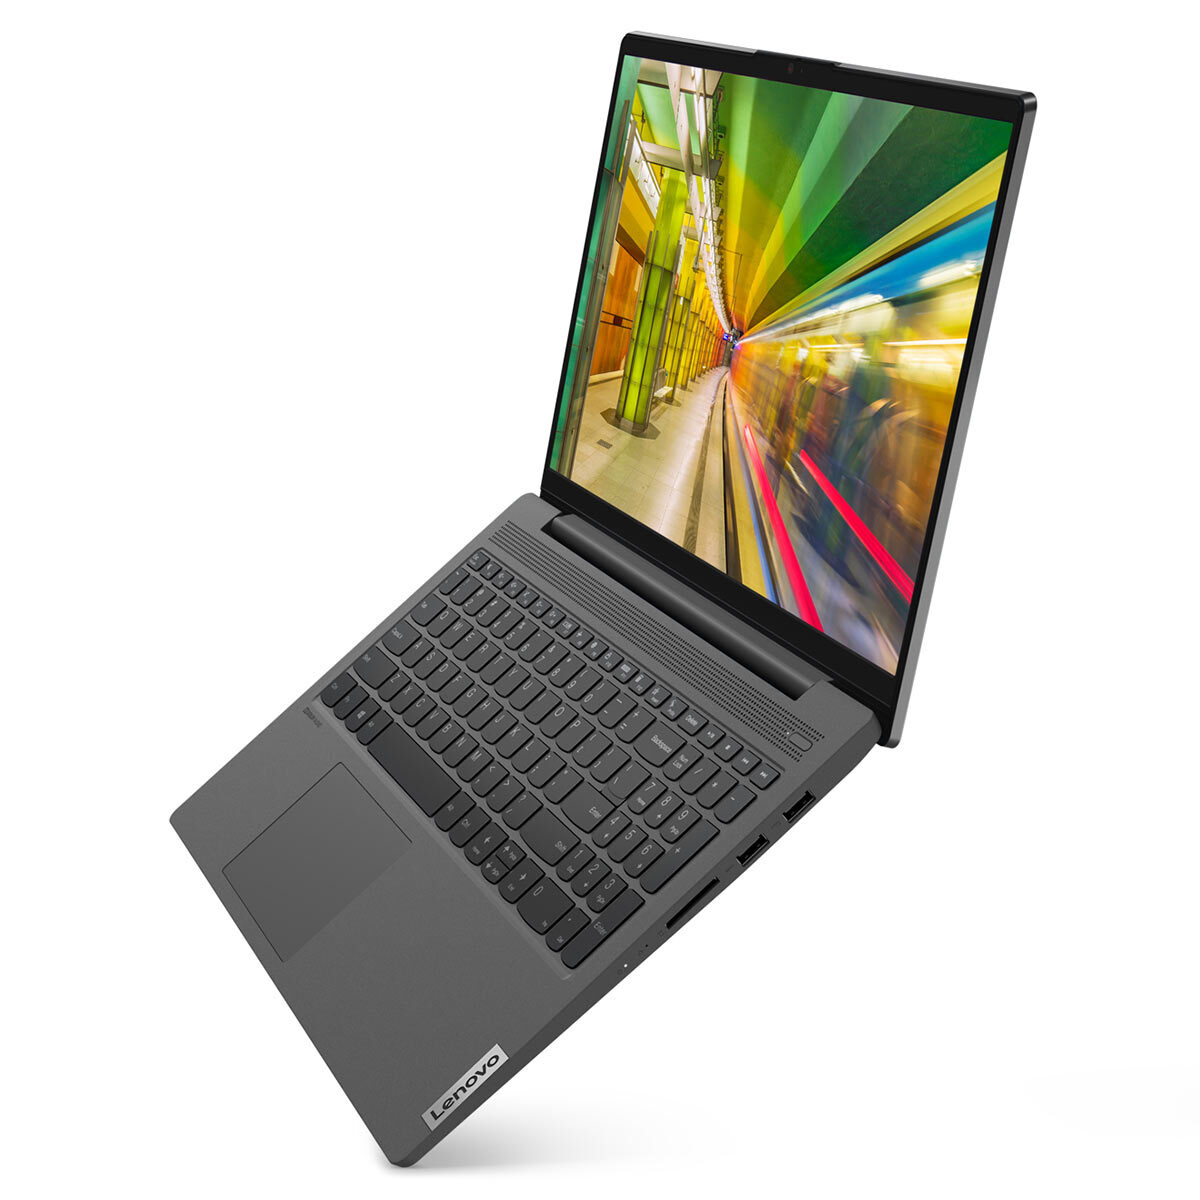 Buy Lenovo Ideapad S500, Intel Core i5, 8GB RAM, 256GB SSD, 15.6 Laptop, 81YK0050UK at costco.co.uk